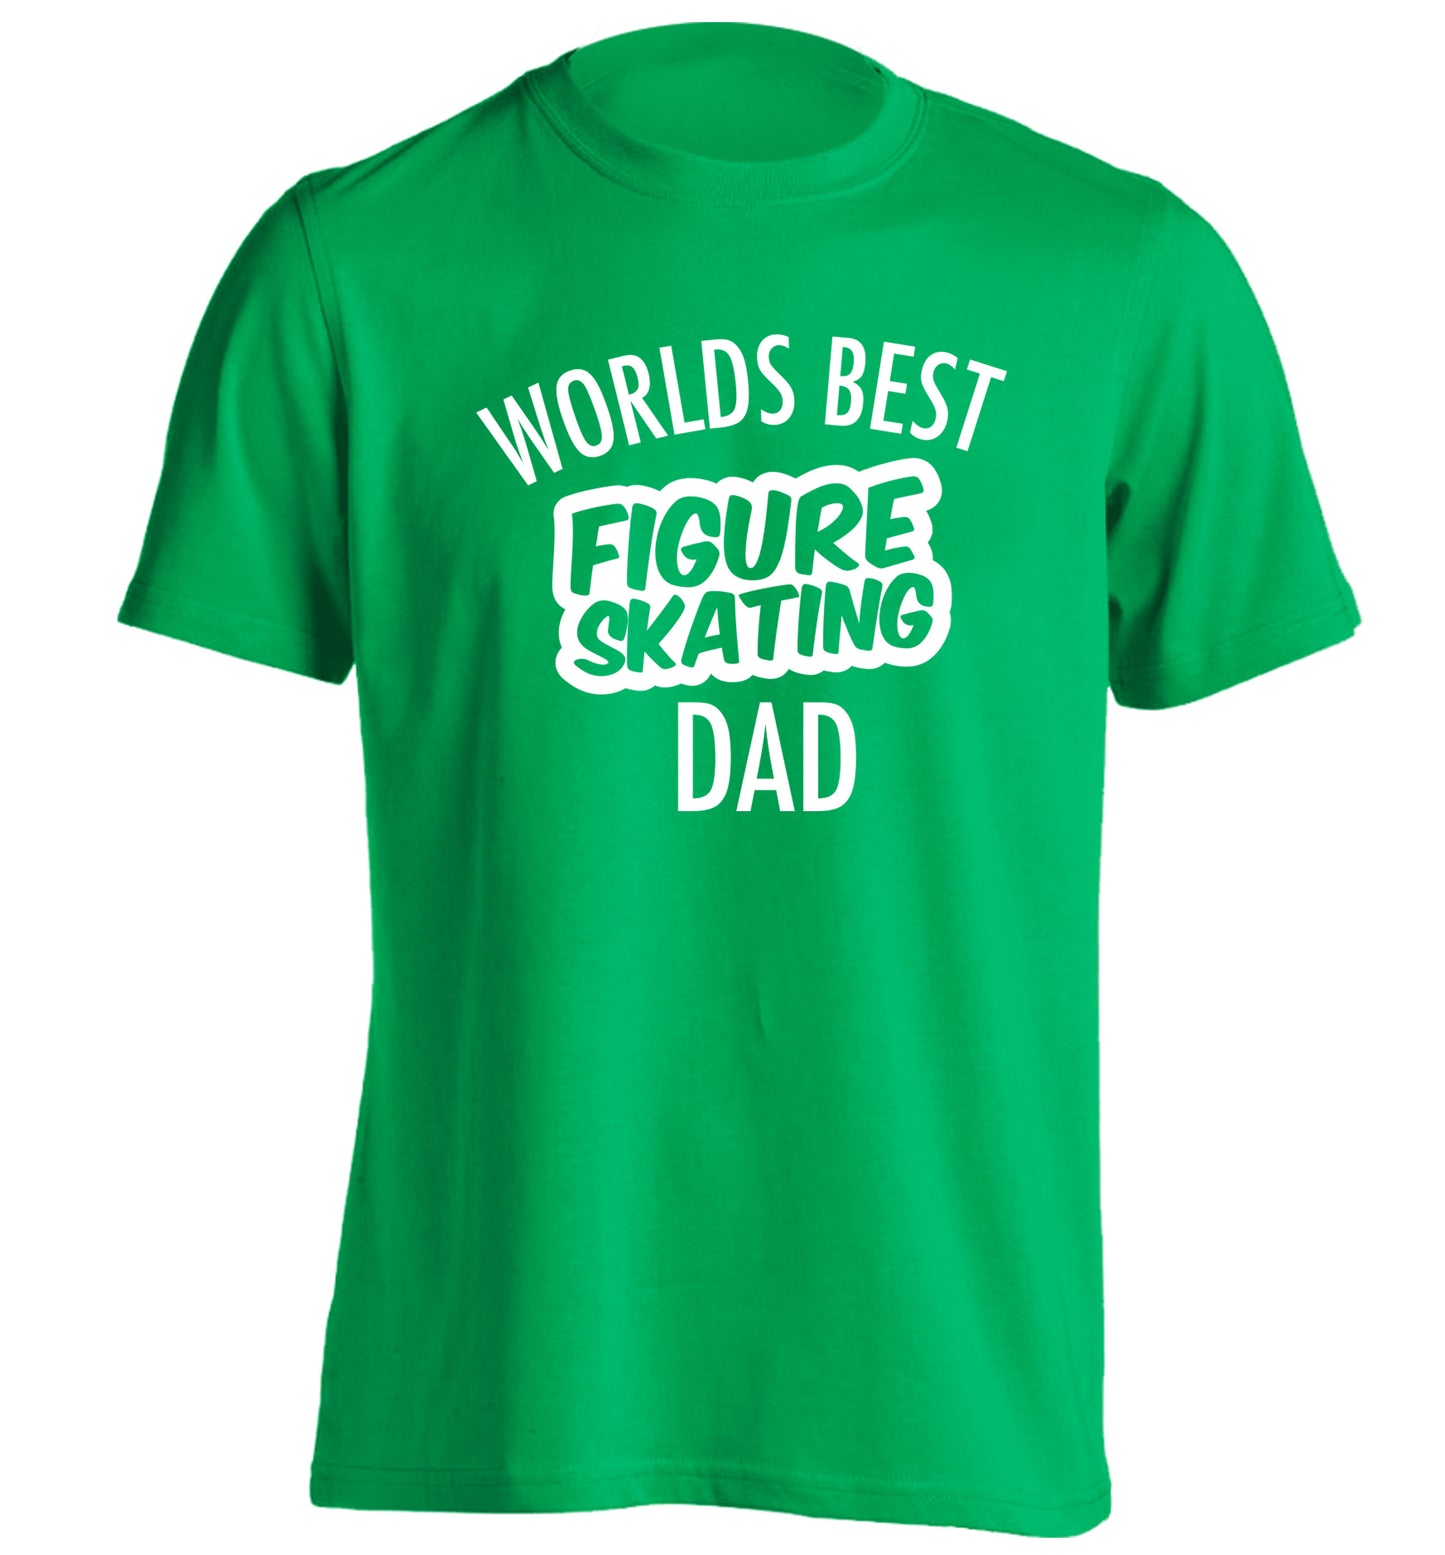 Worlds best figure skating dad adults unisexgreen Tshirt 2XL